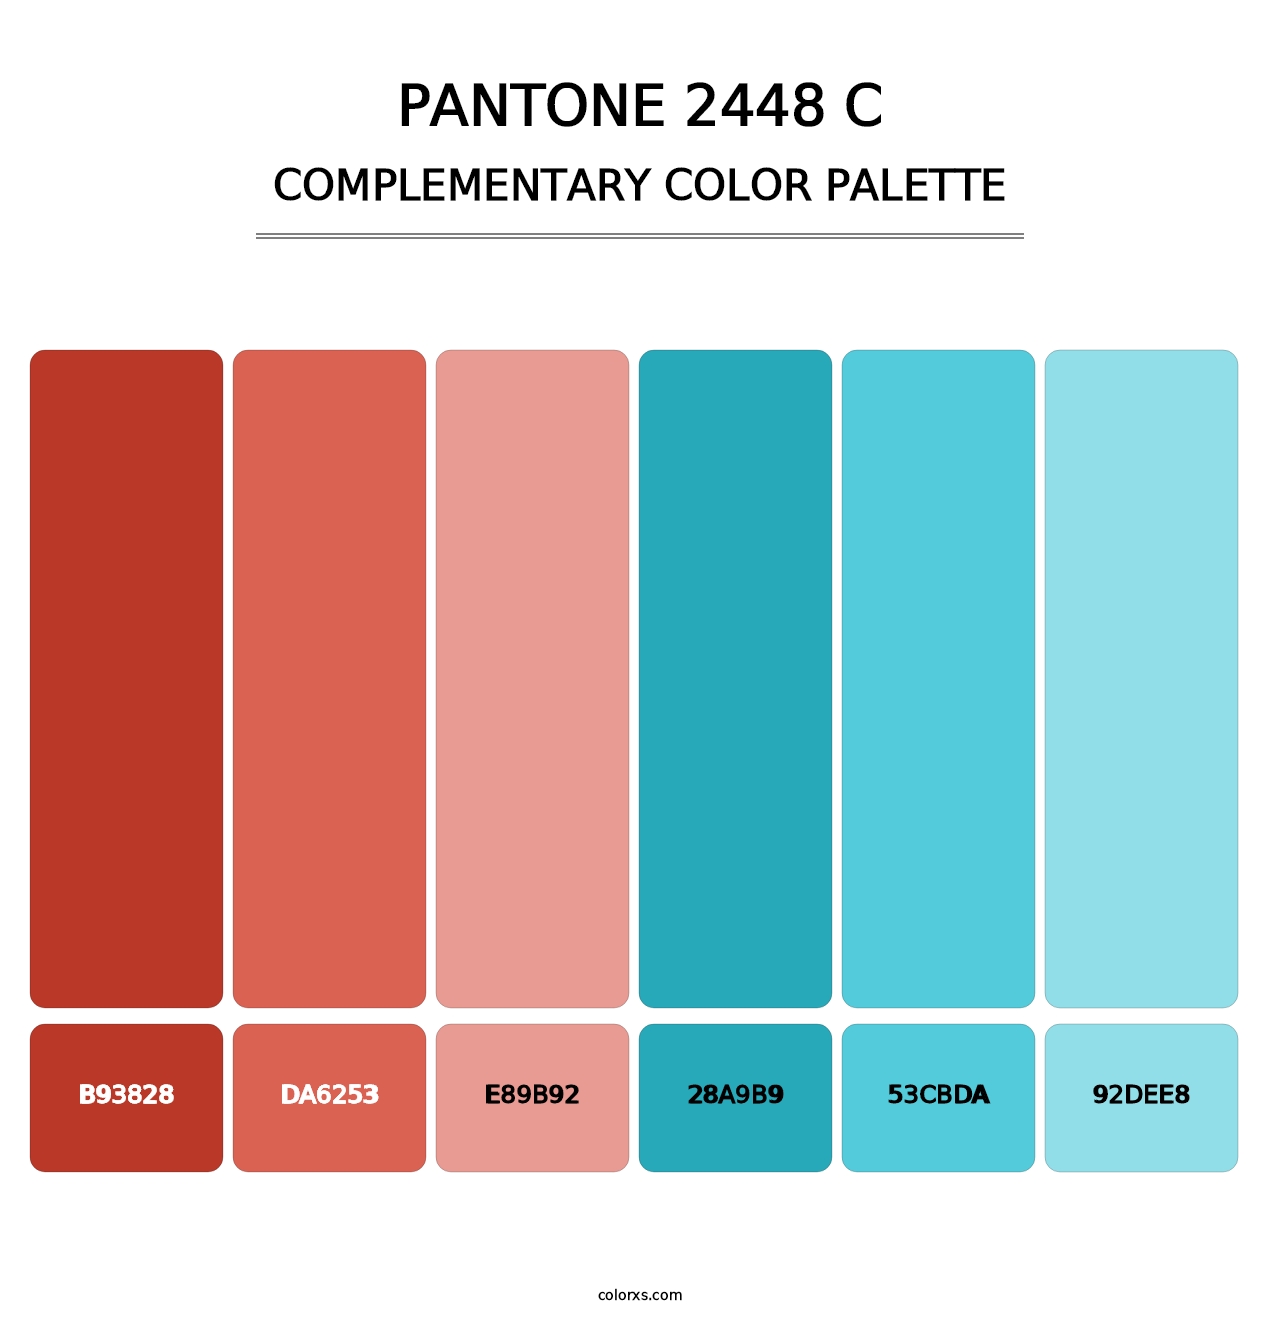 PANTONE 2448 C - Complementary Color Palette